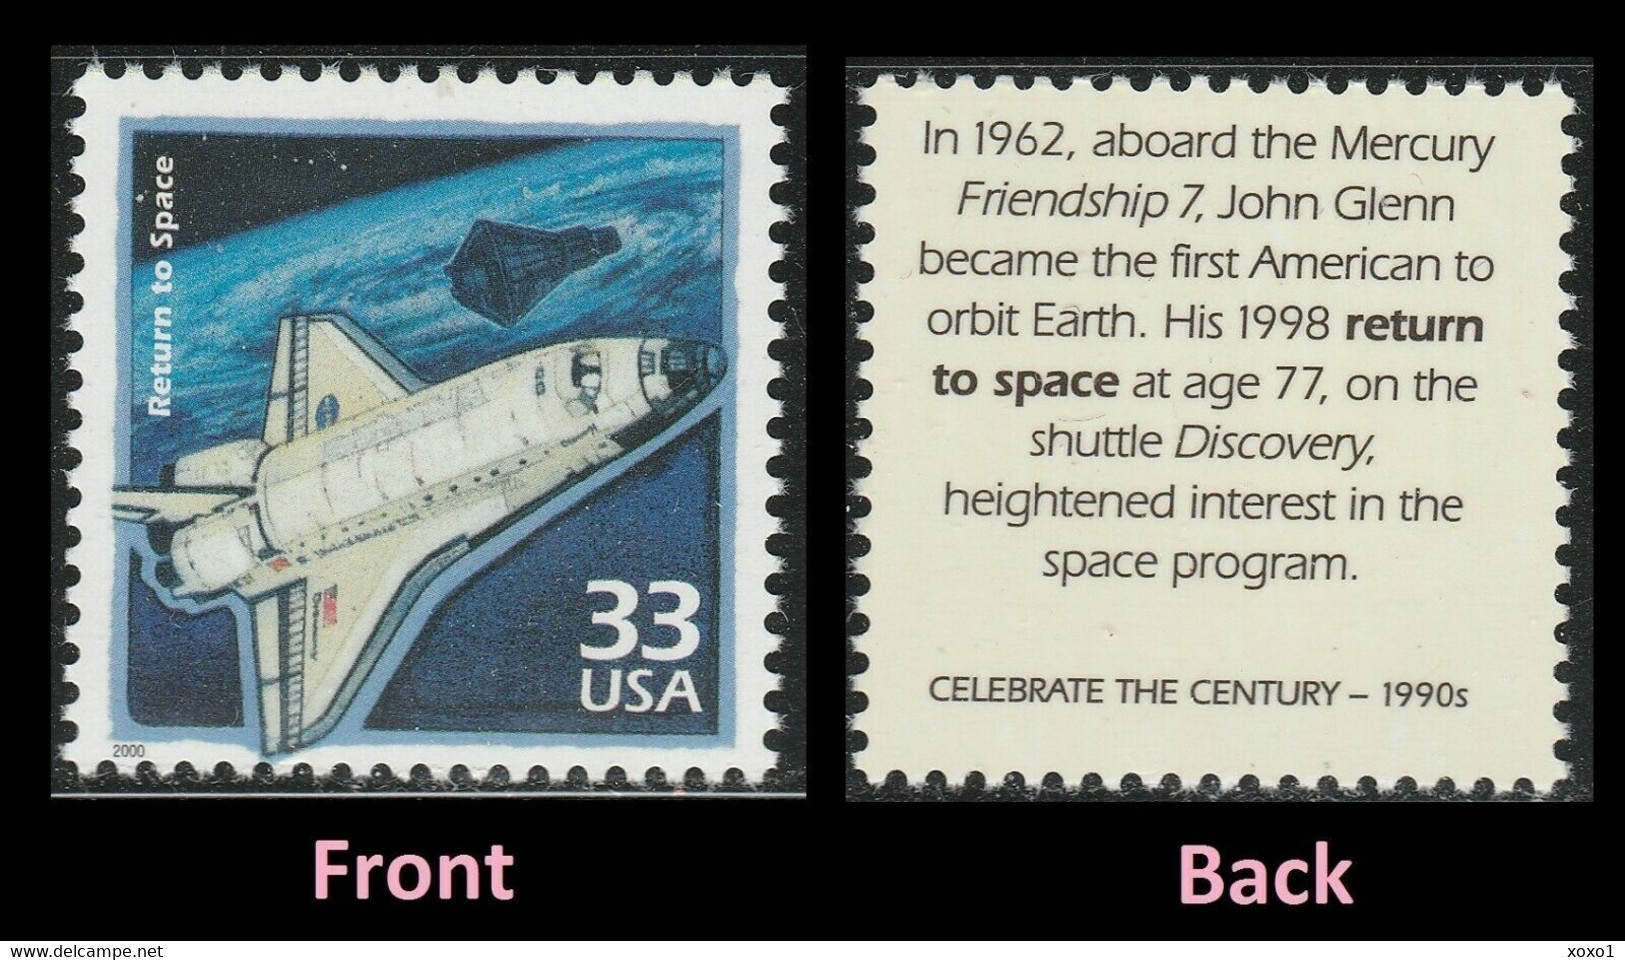 USA 2000 MiNr. 3295 Celebrate The Century 1990s Space Shuttle "Discovery" 1v MNH ** 0,80 € - América Del Norte